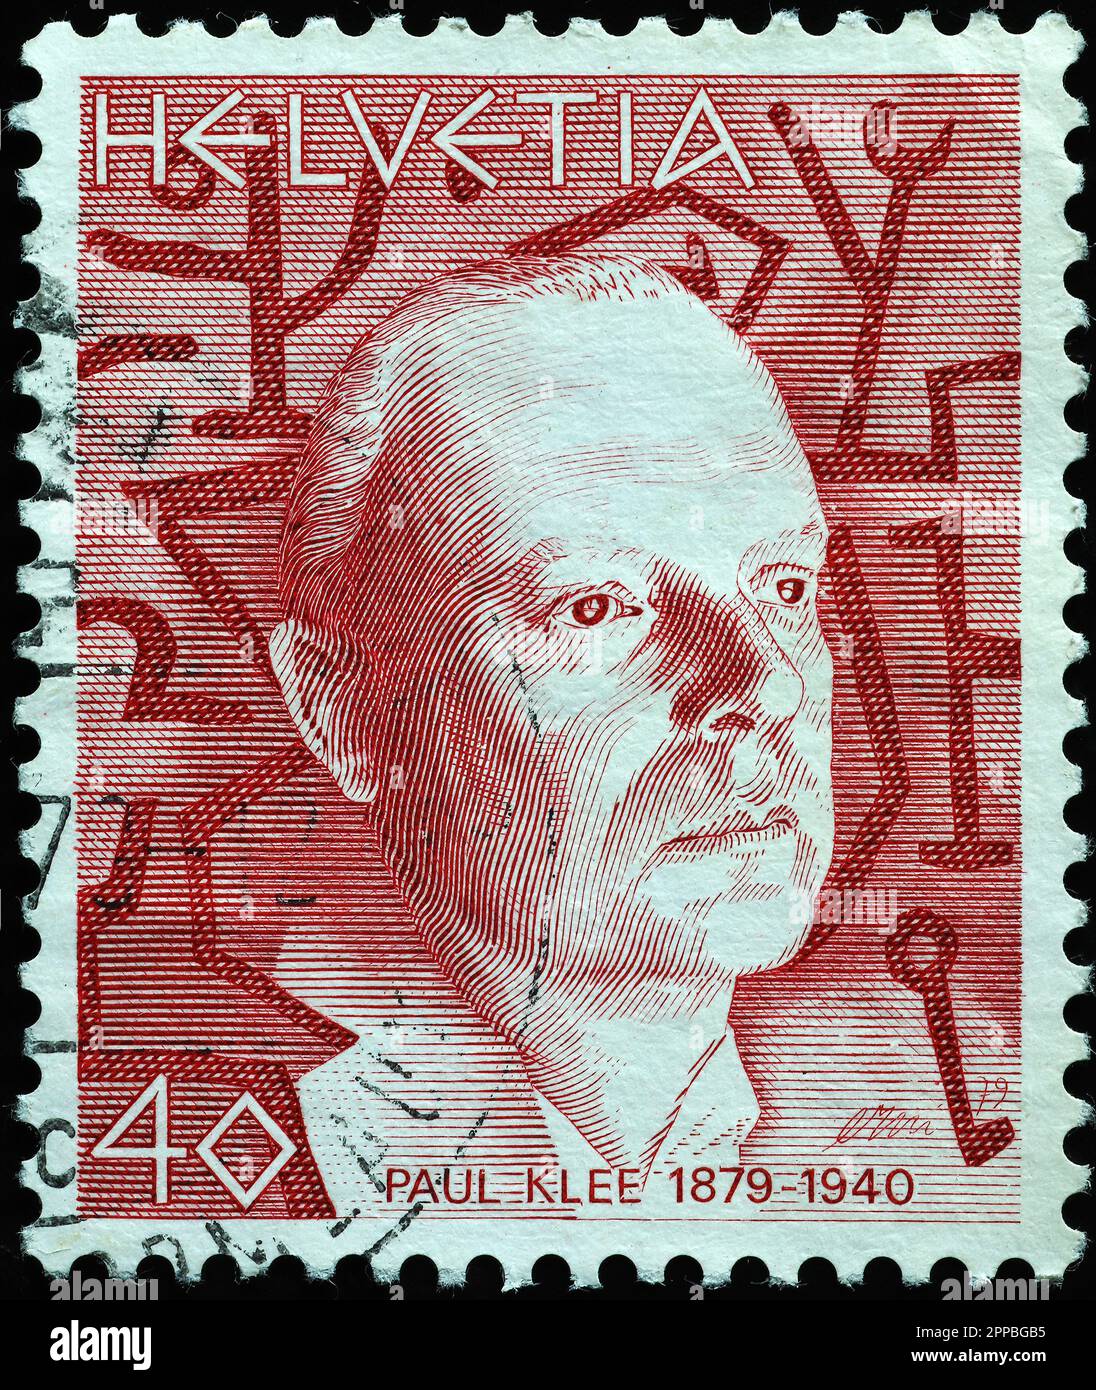 Paul Klee portrait on swiss postage stamp Stock Photo